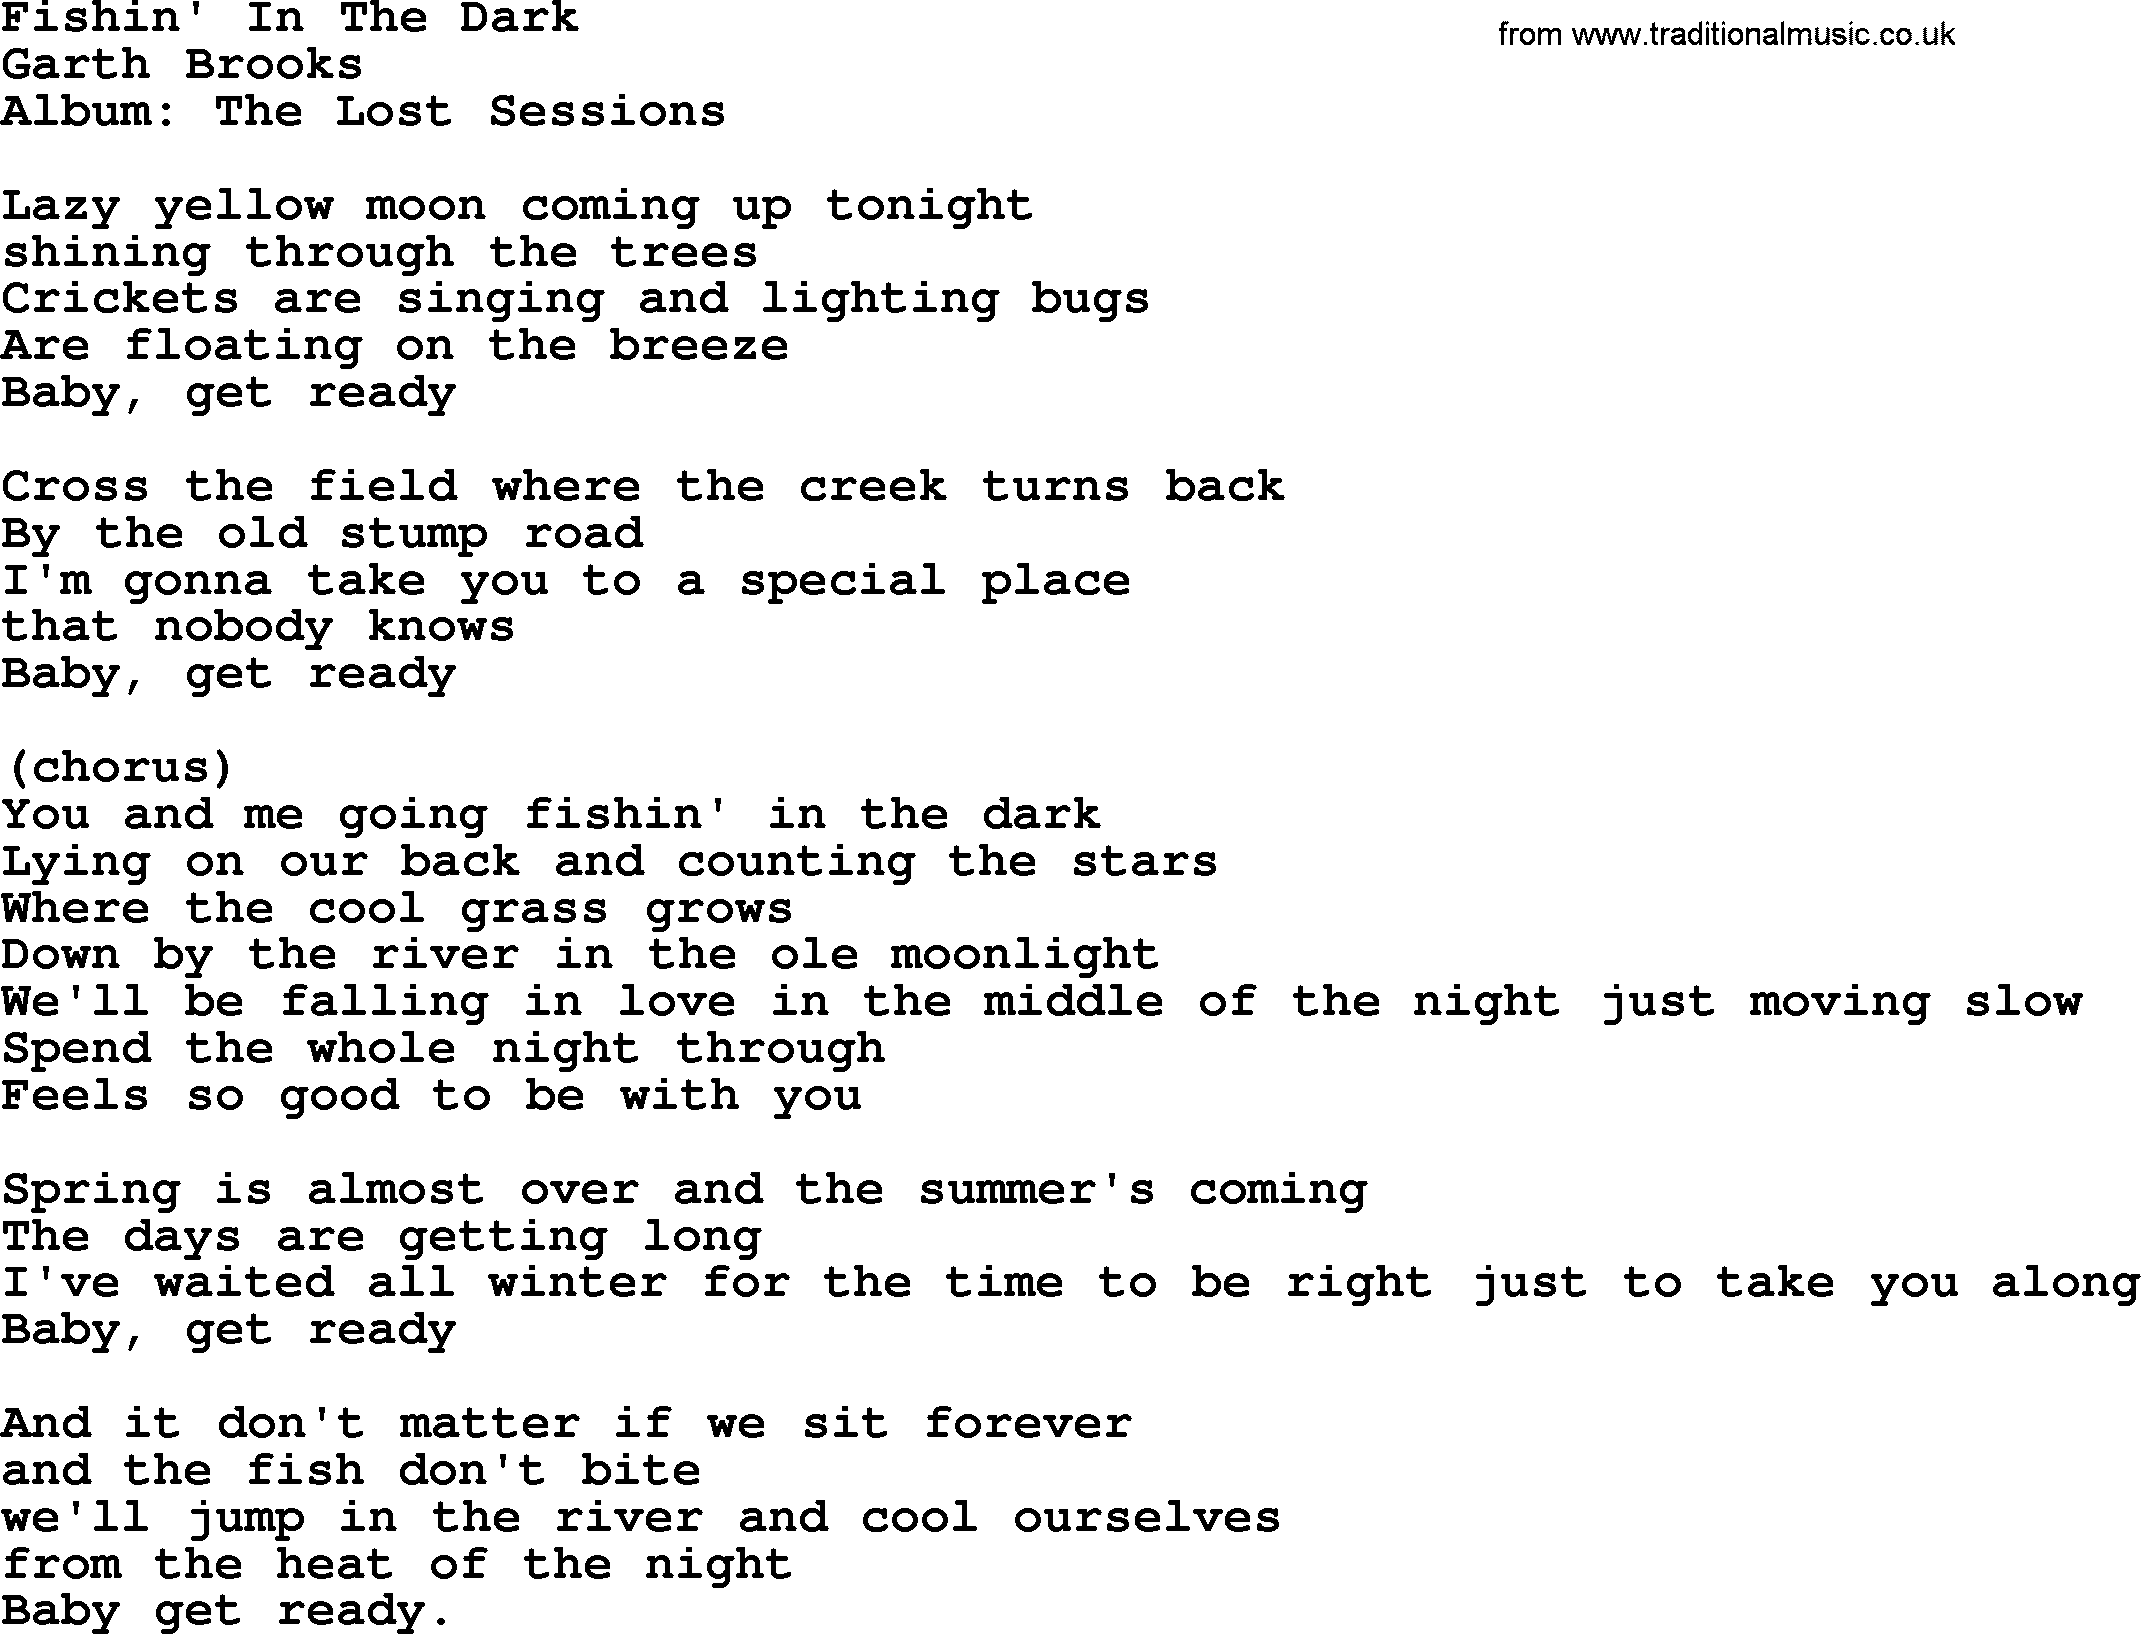 Garth Brooks song: Fishin' In The Dark, lyrics